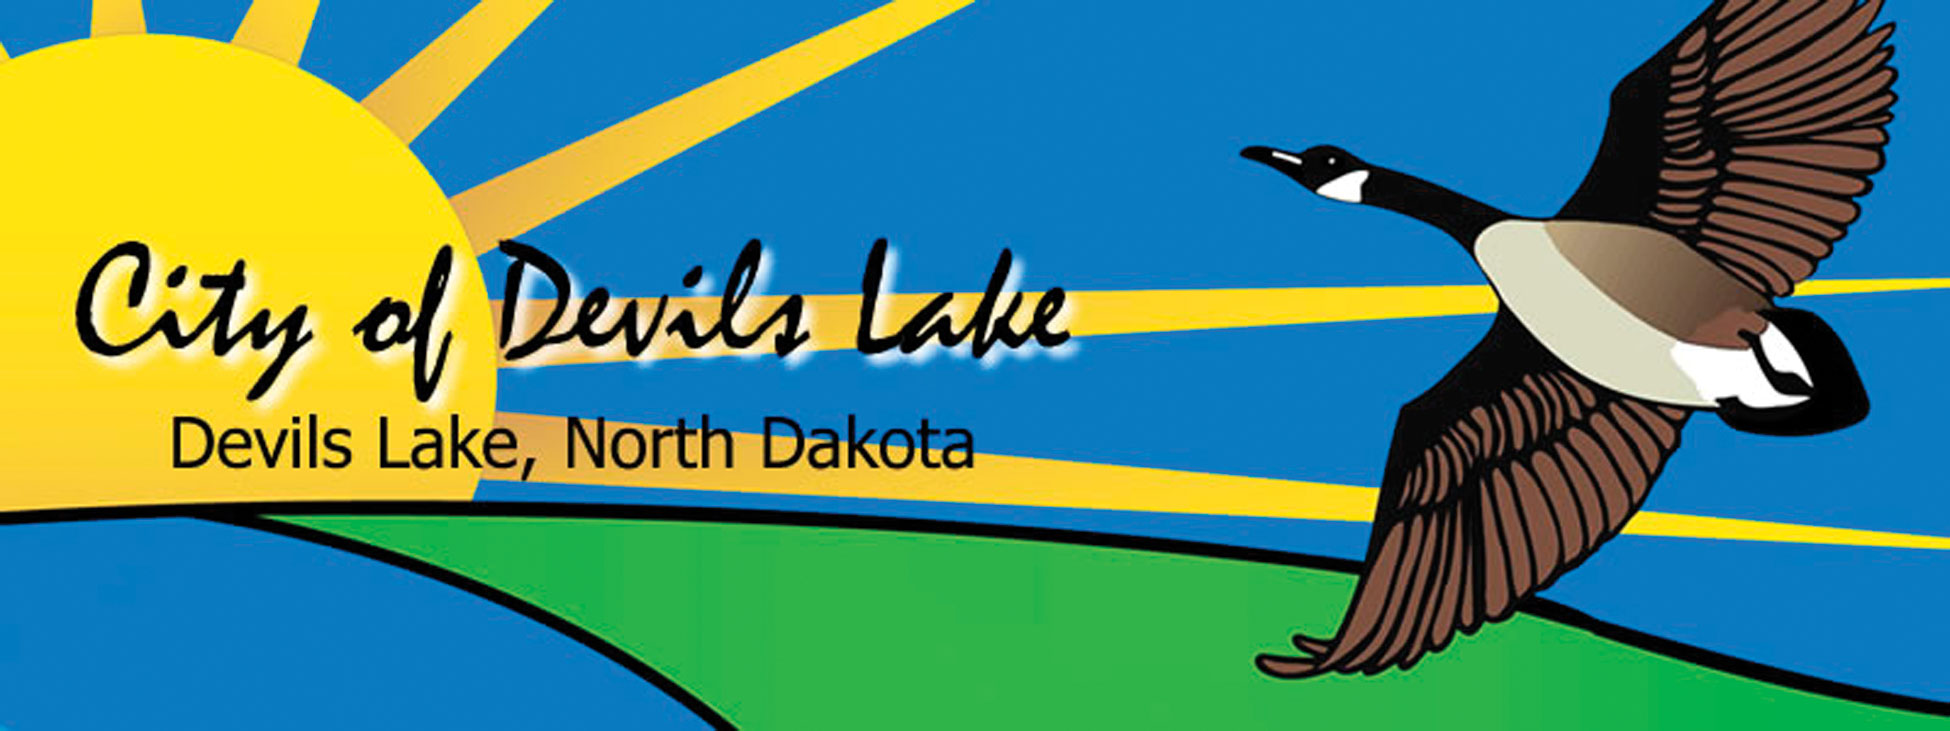 City of Devils Lake website